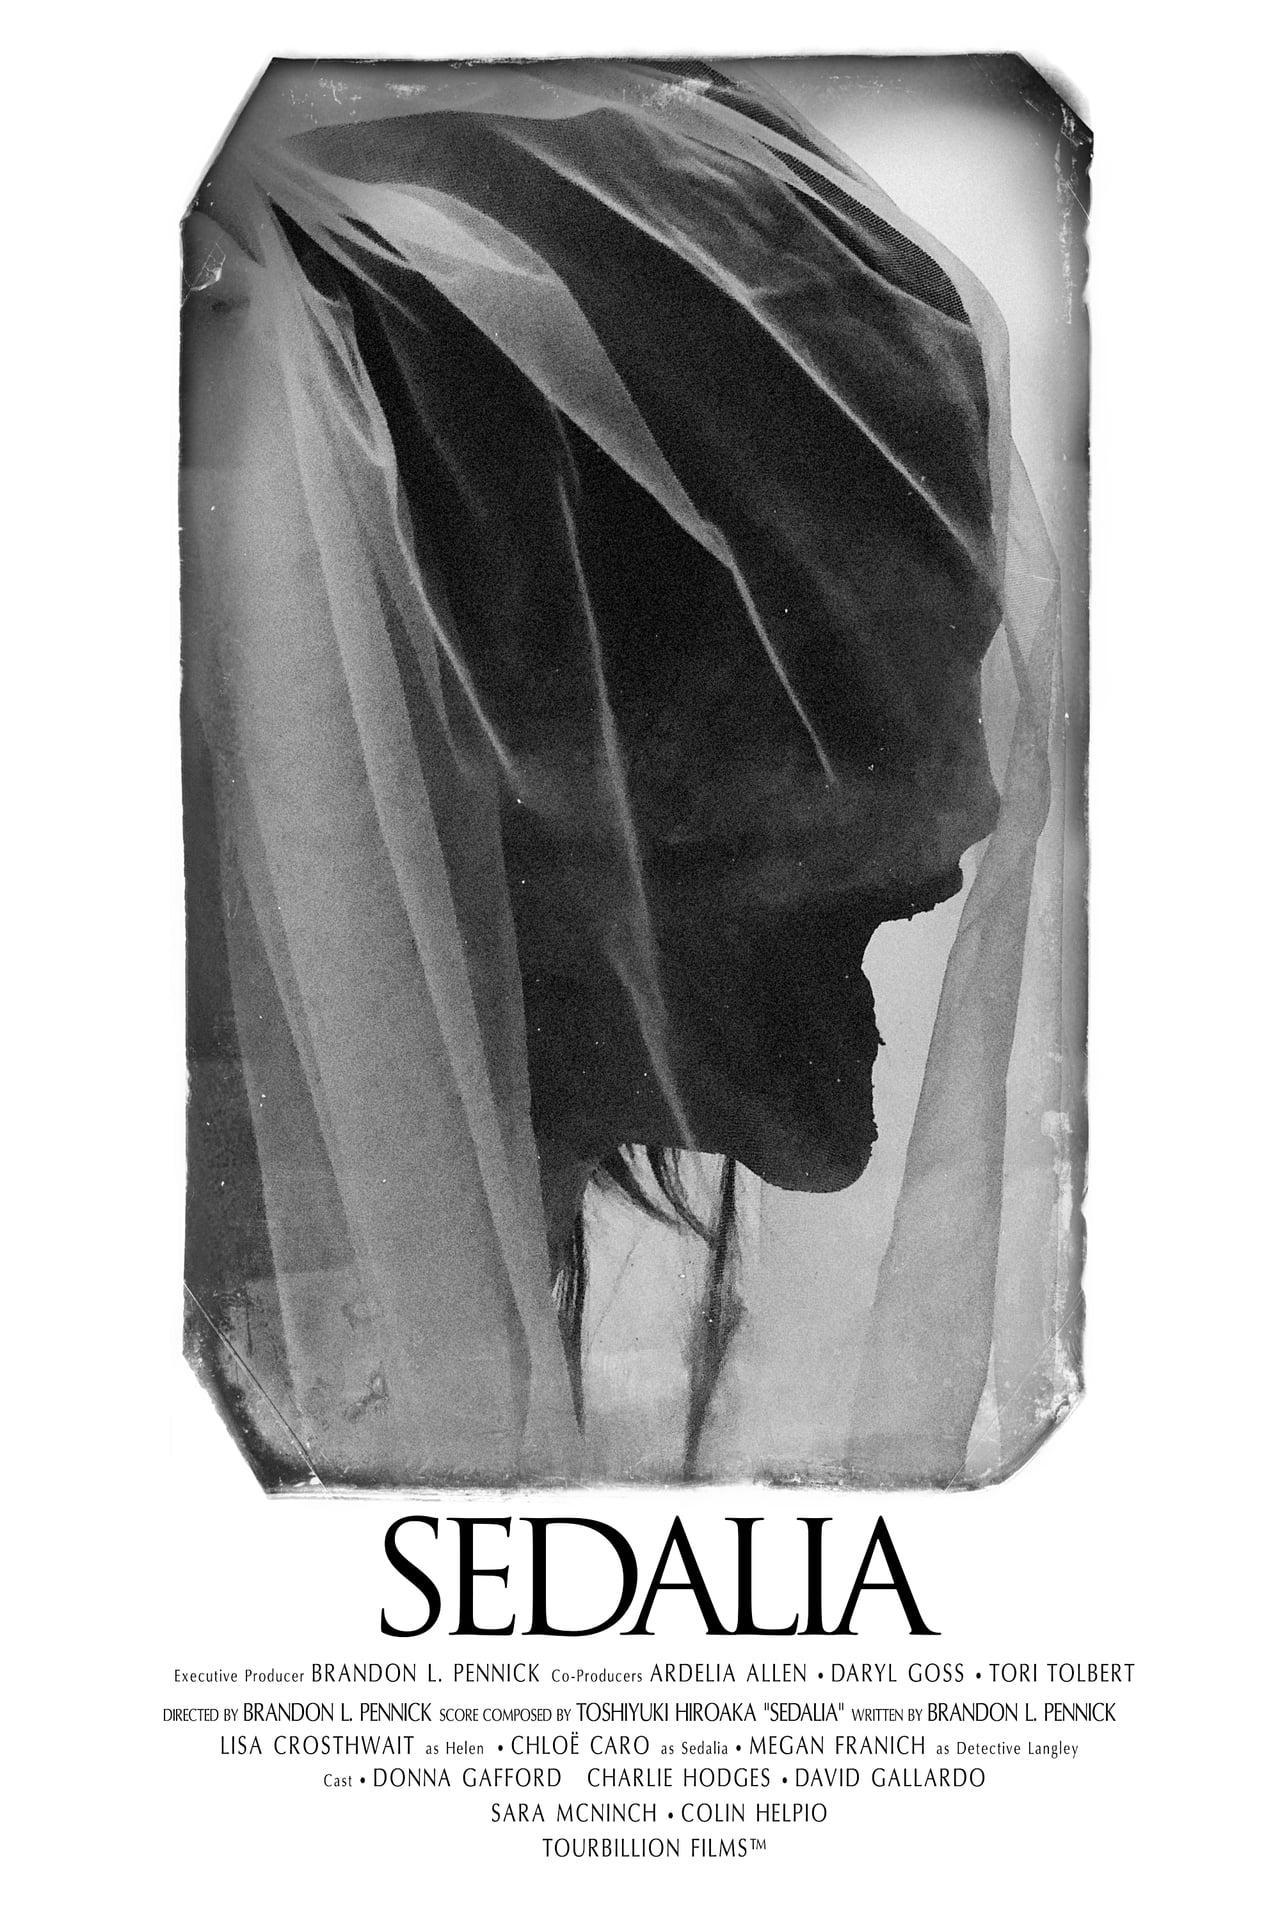 SEDALIA poster